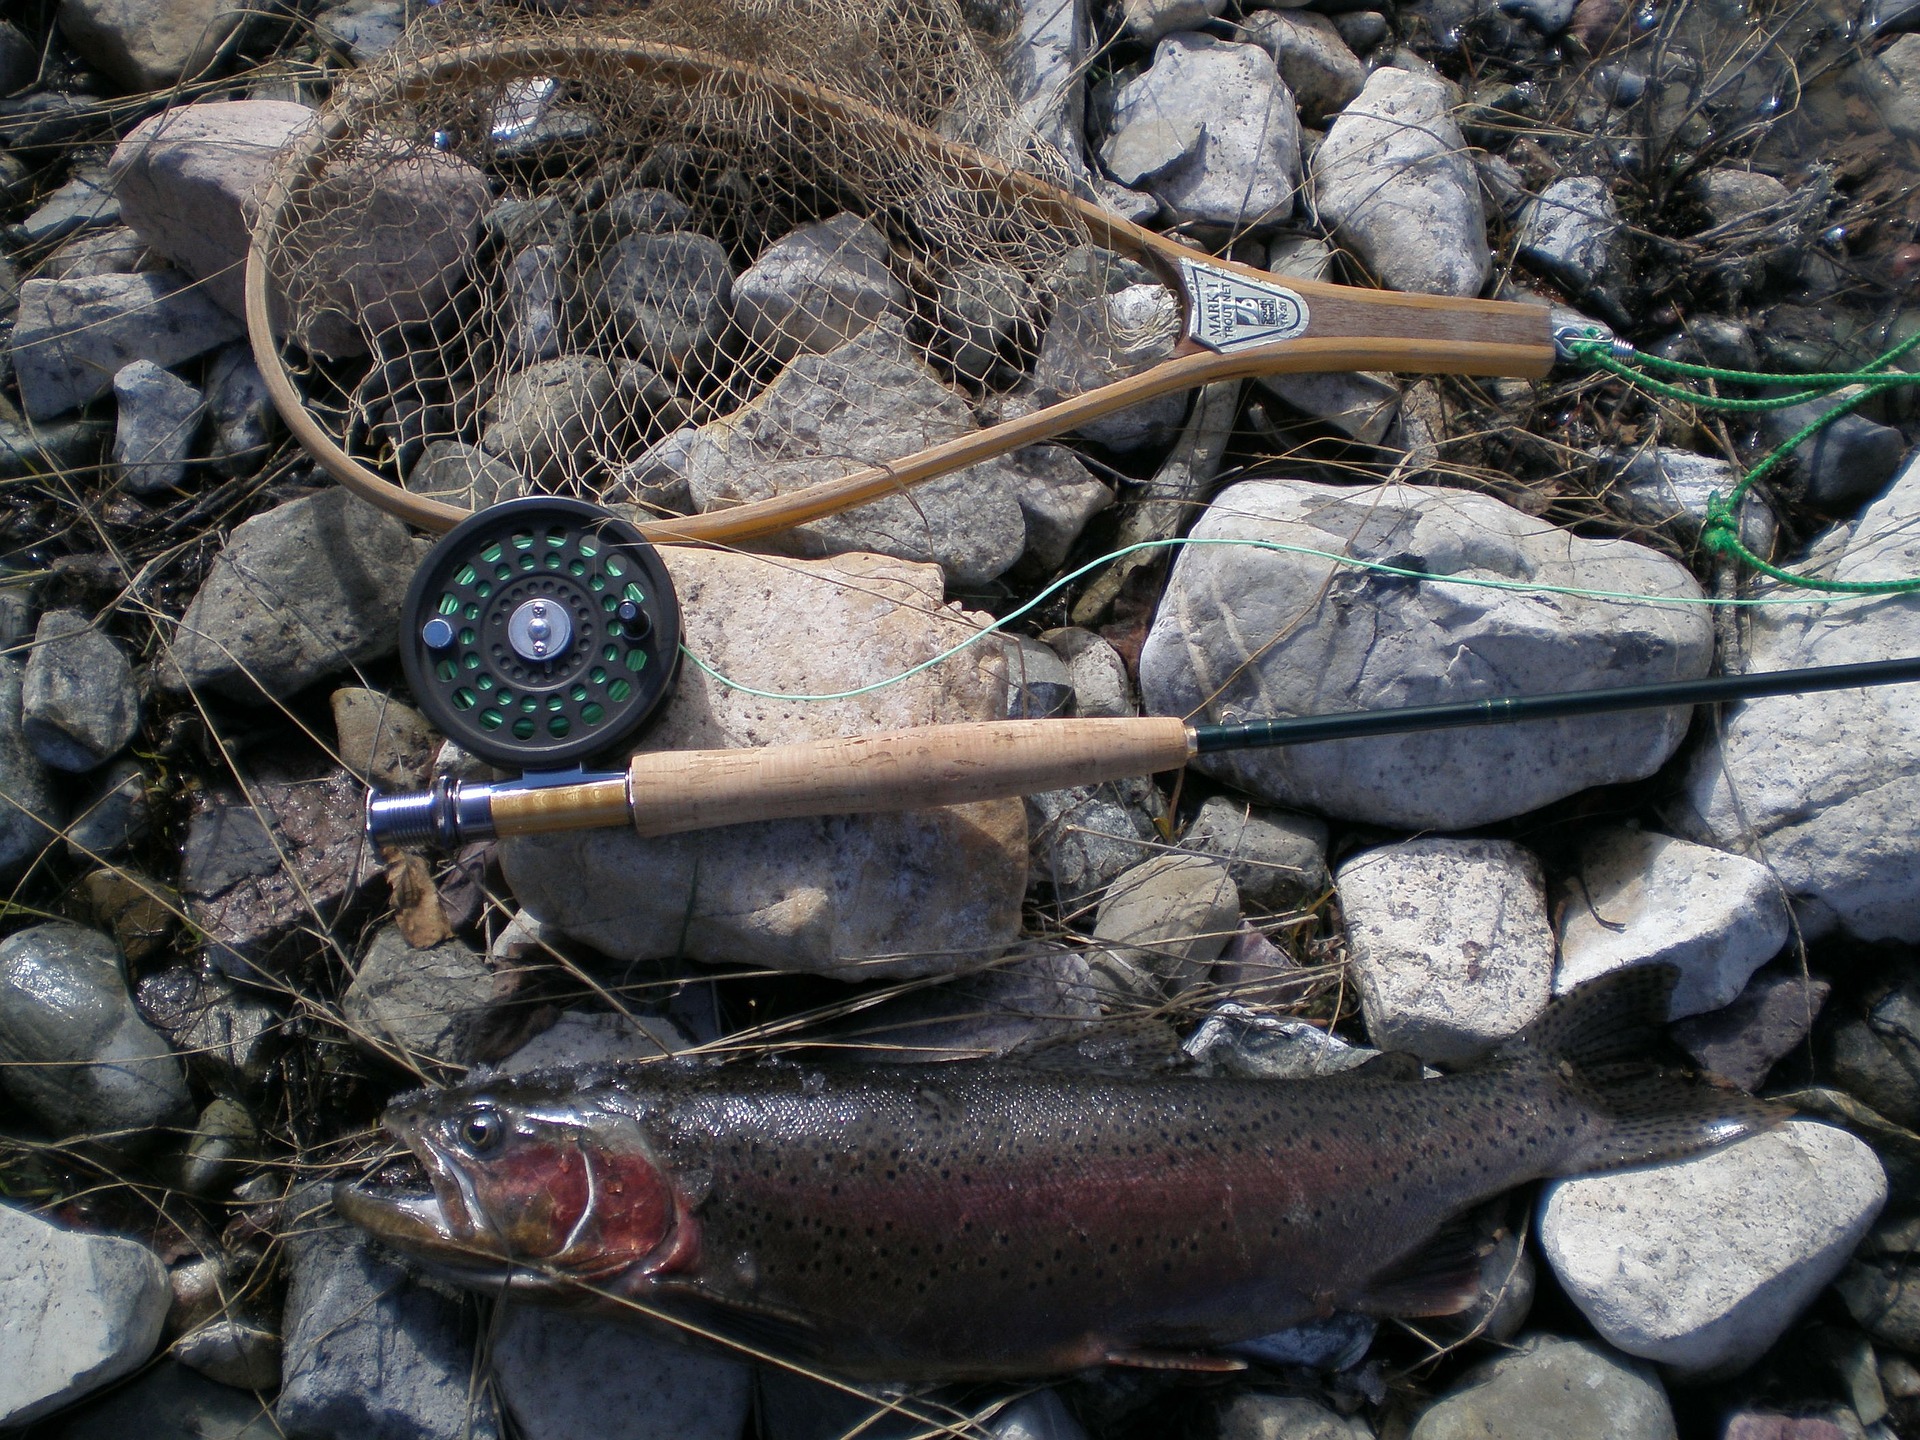 Hatchery winter steelhead fishing in the Umpqua Basin might net